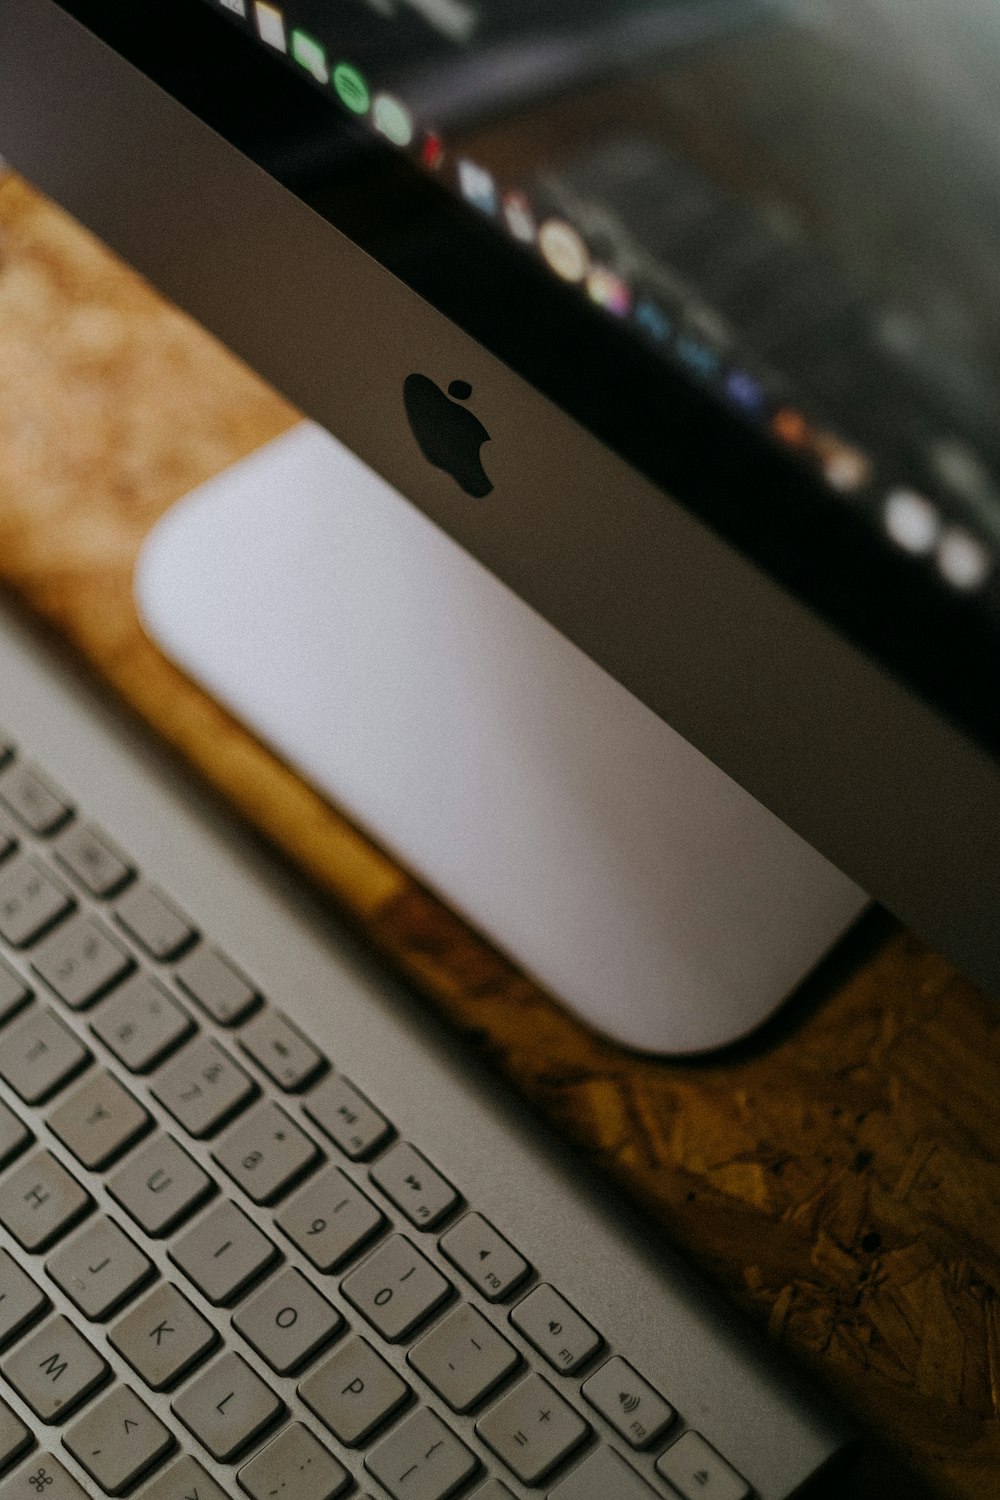 iMac plateado encendido junto al teclado blanco de Mac